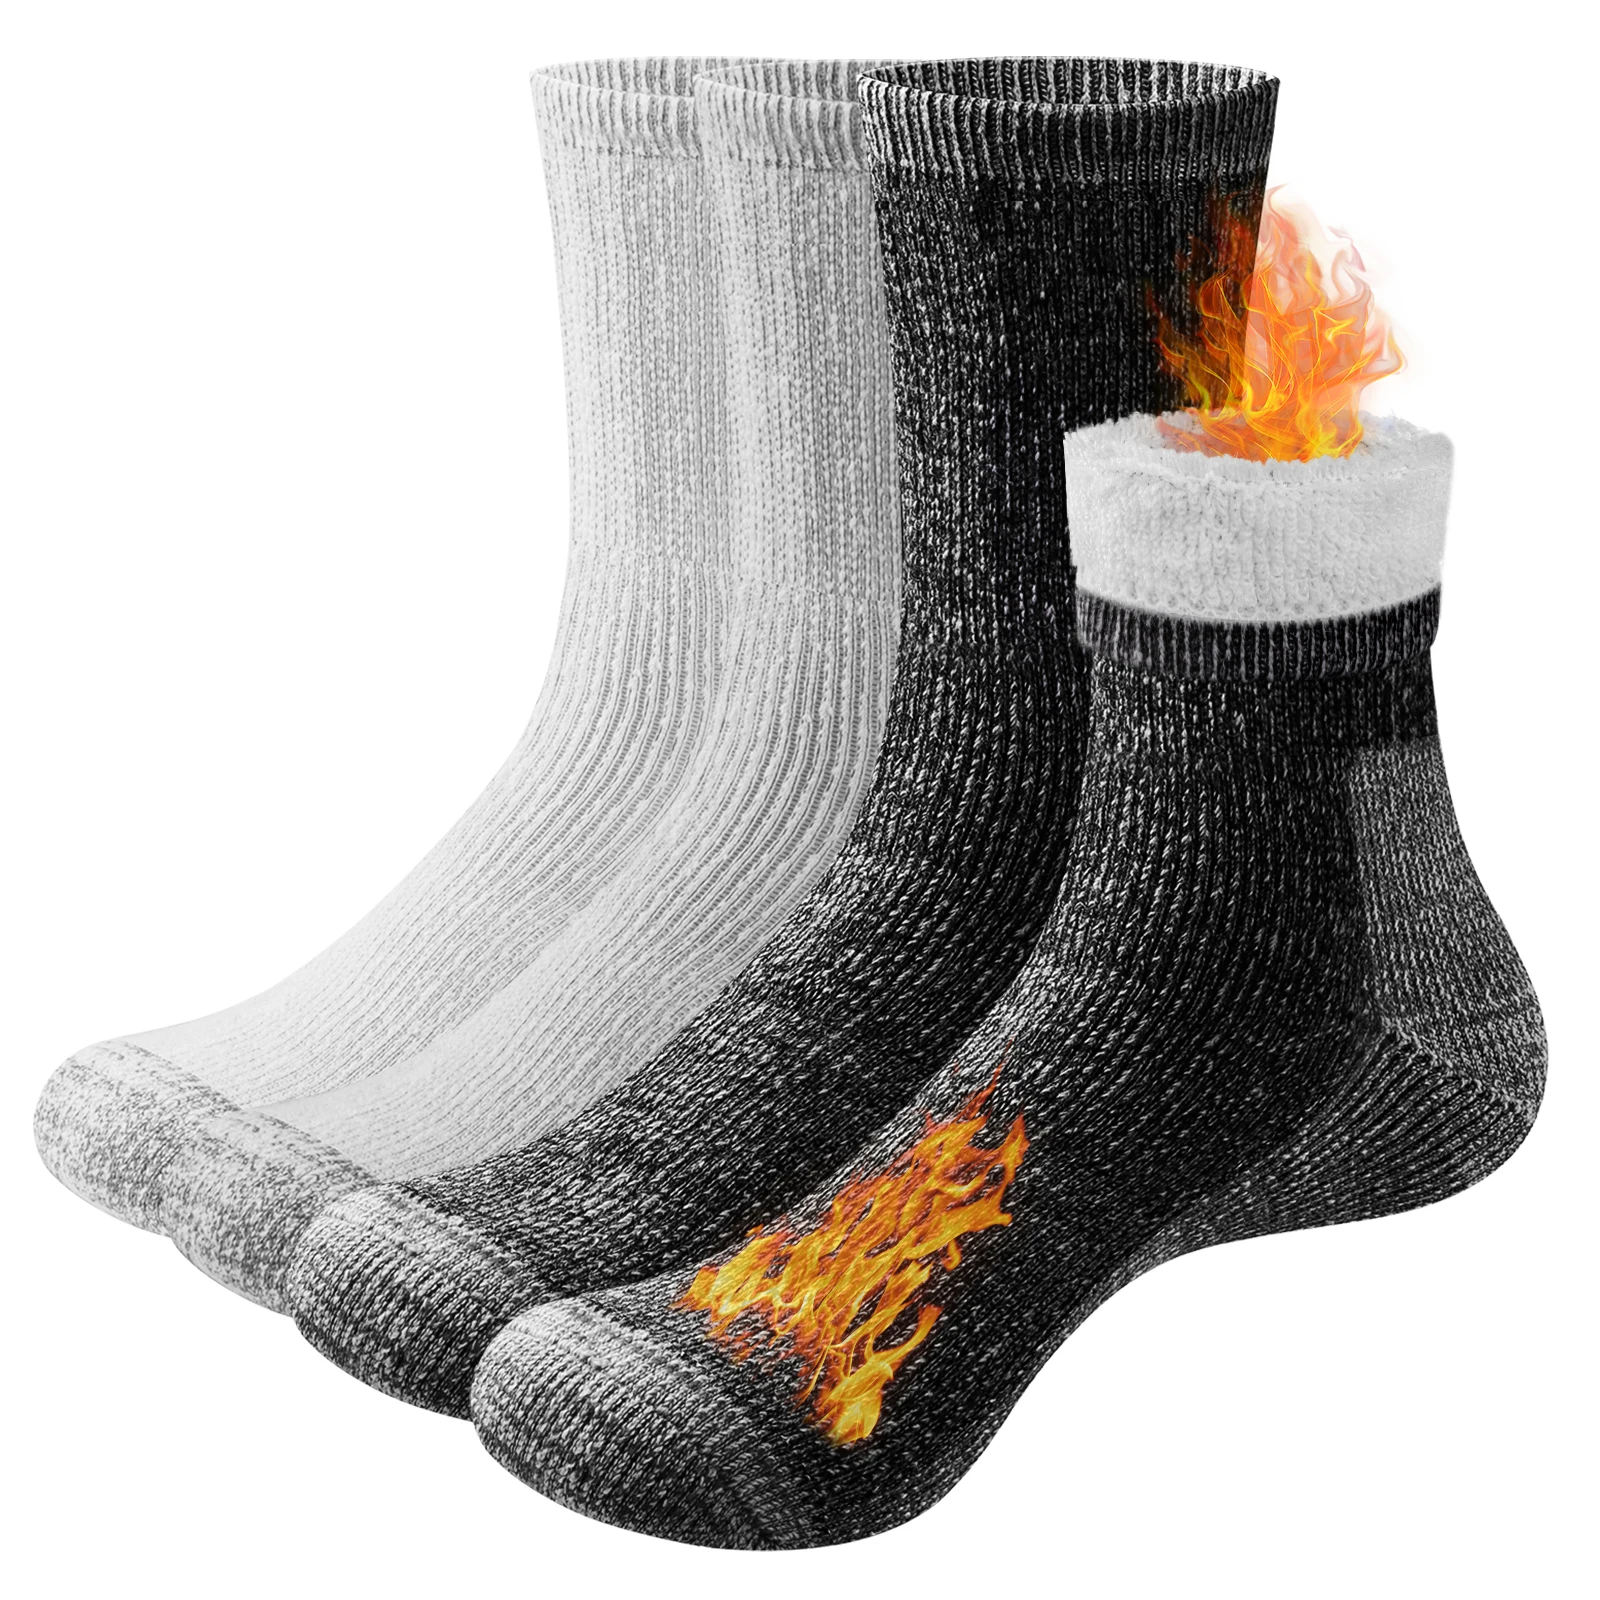 

YUEDGE Mens Hiking Socks Cushioned Merino Wool Socks Thermal Warm Socks Thick Winter Socks For Men Size 37-46, 2 Pairs